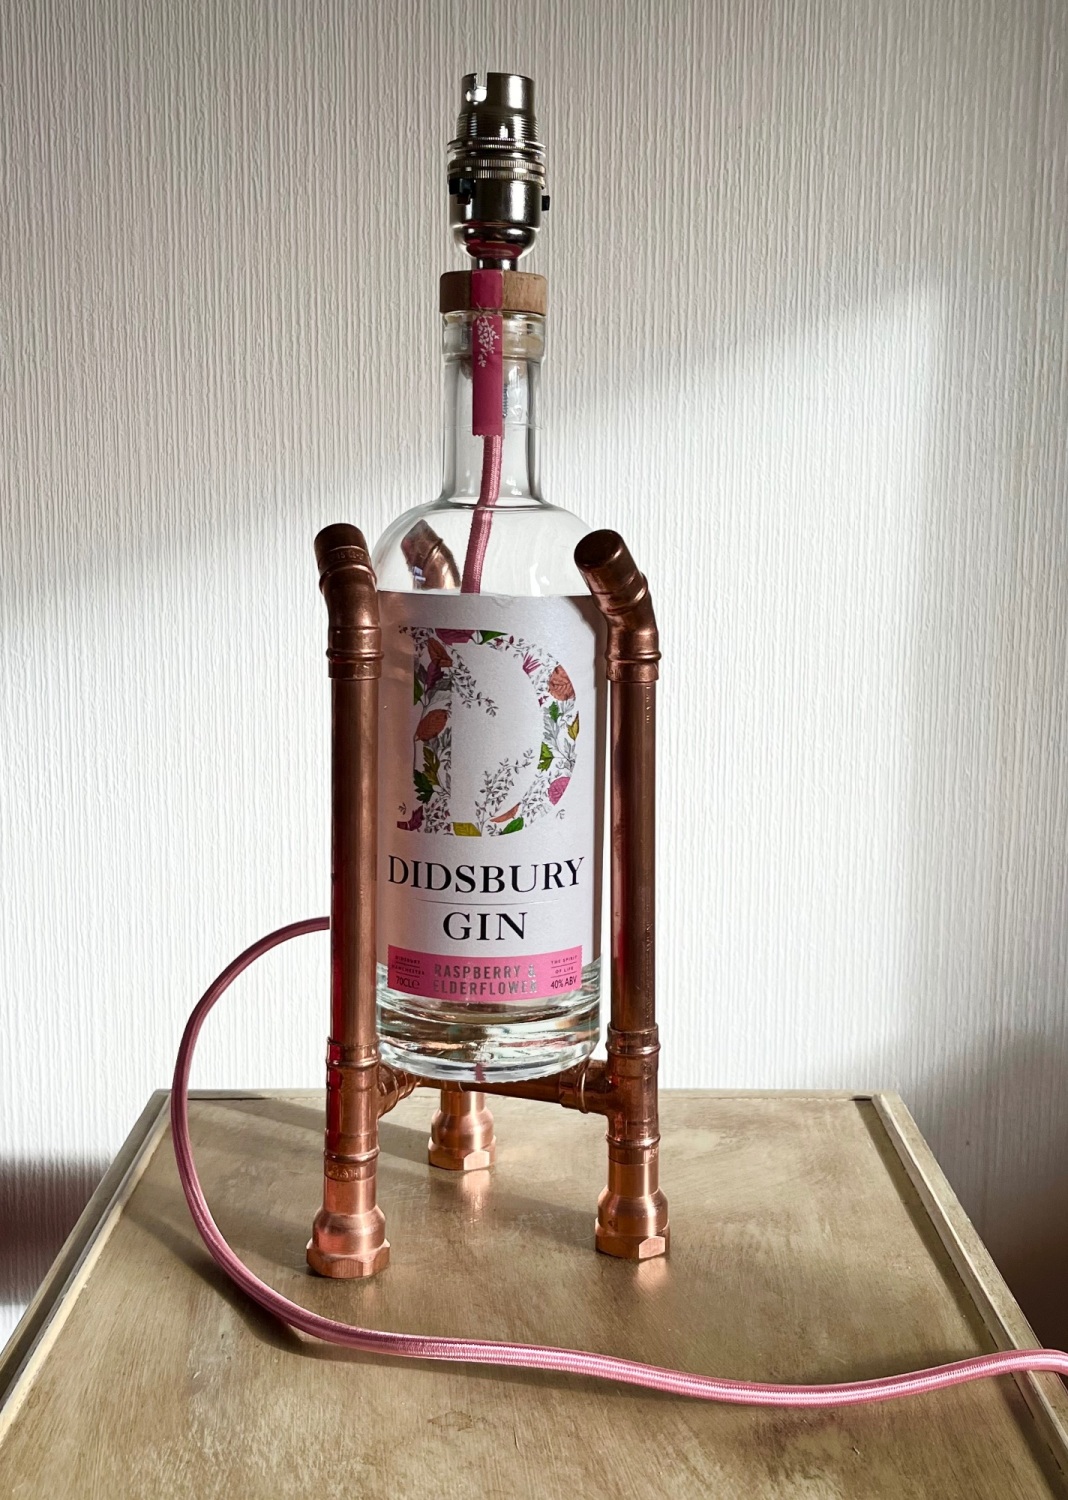 Didsbury Raspberry and Elderflower Gin Bottle Lamp with Copper Base